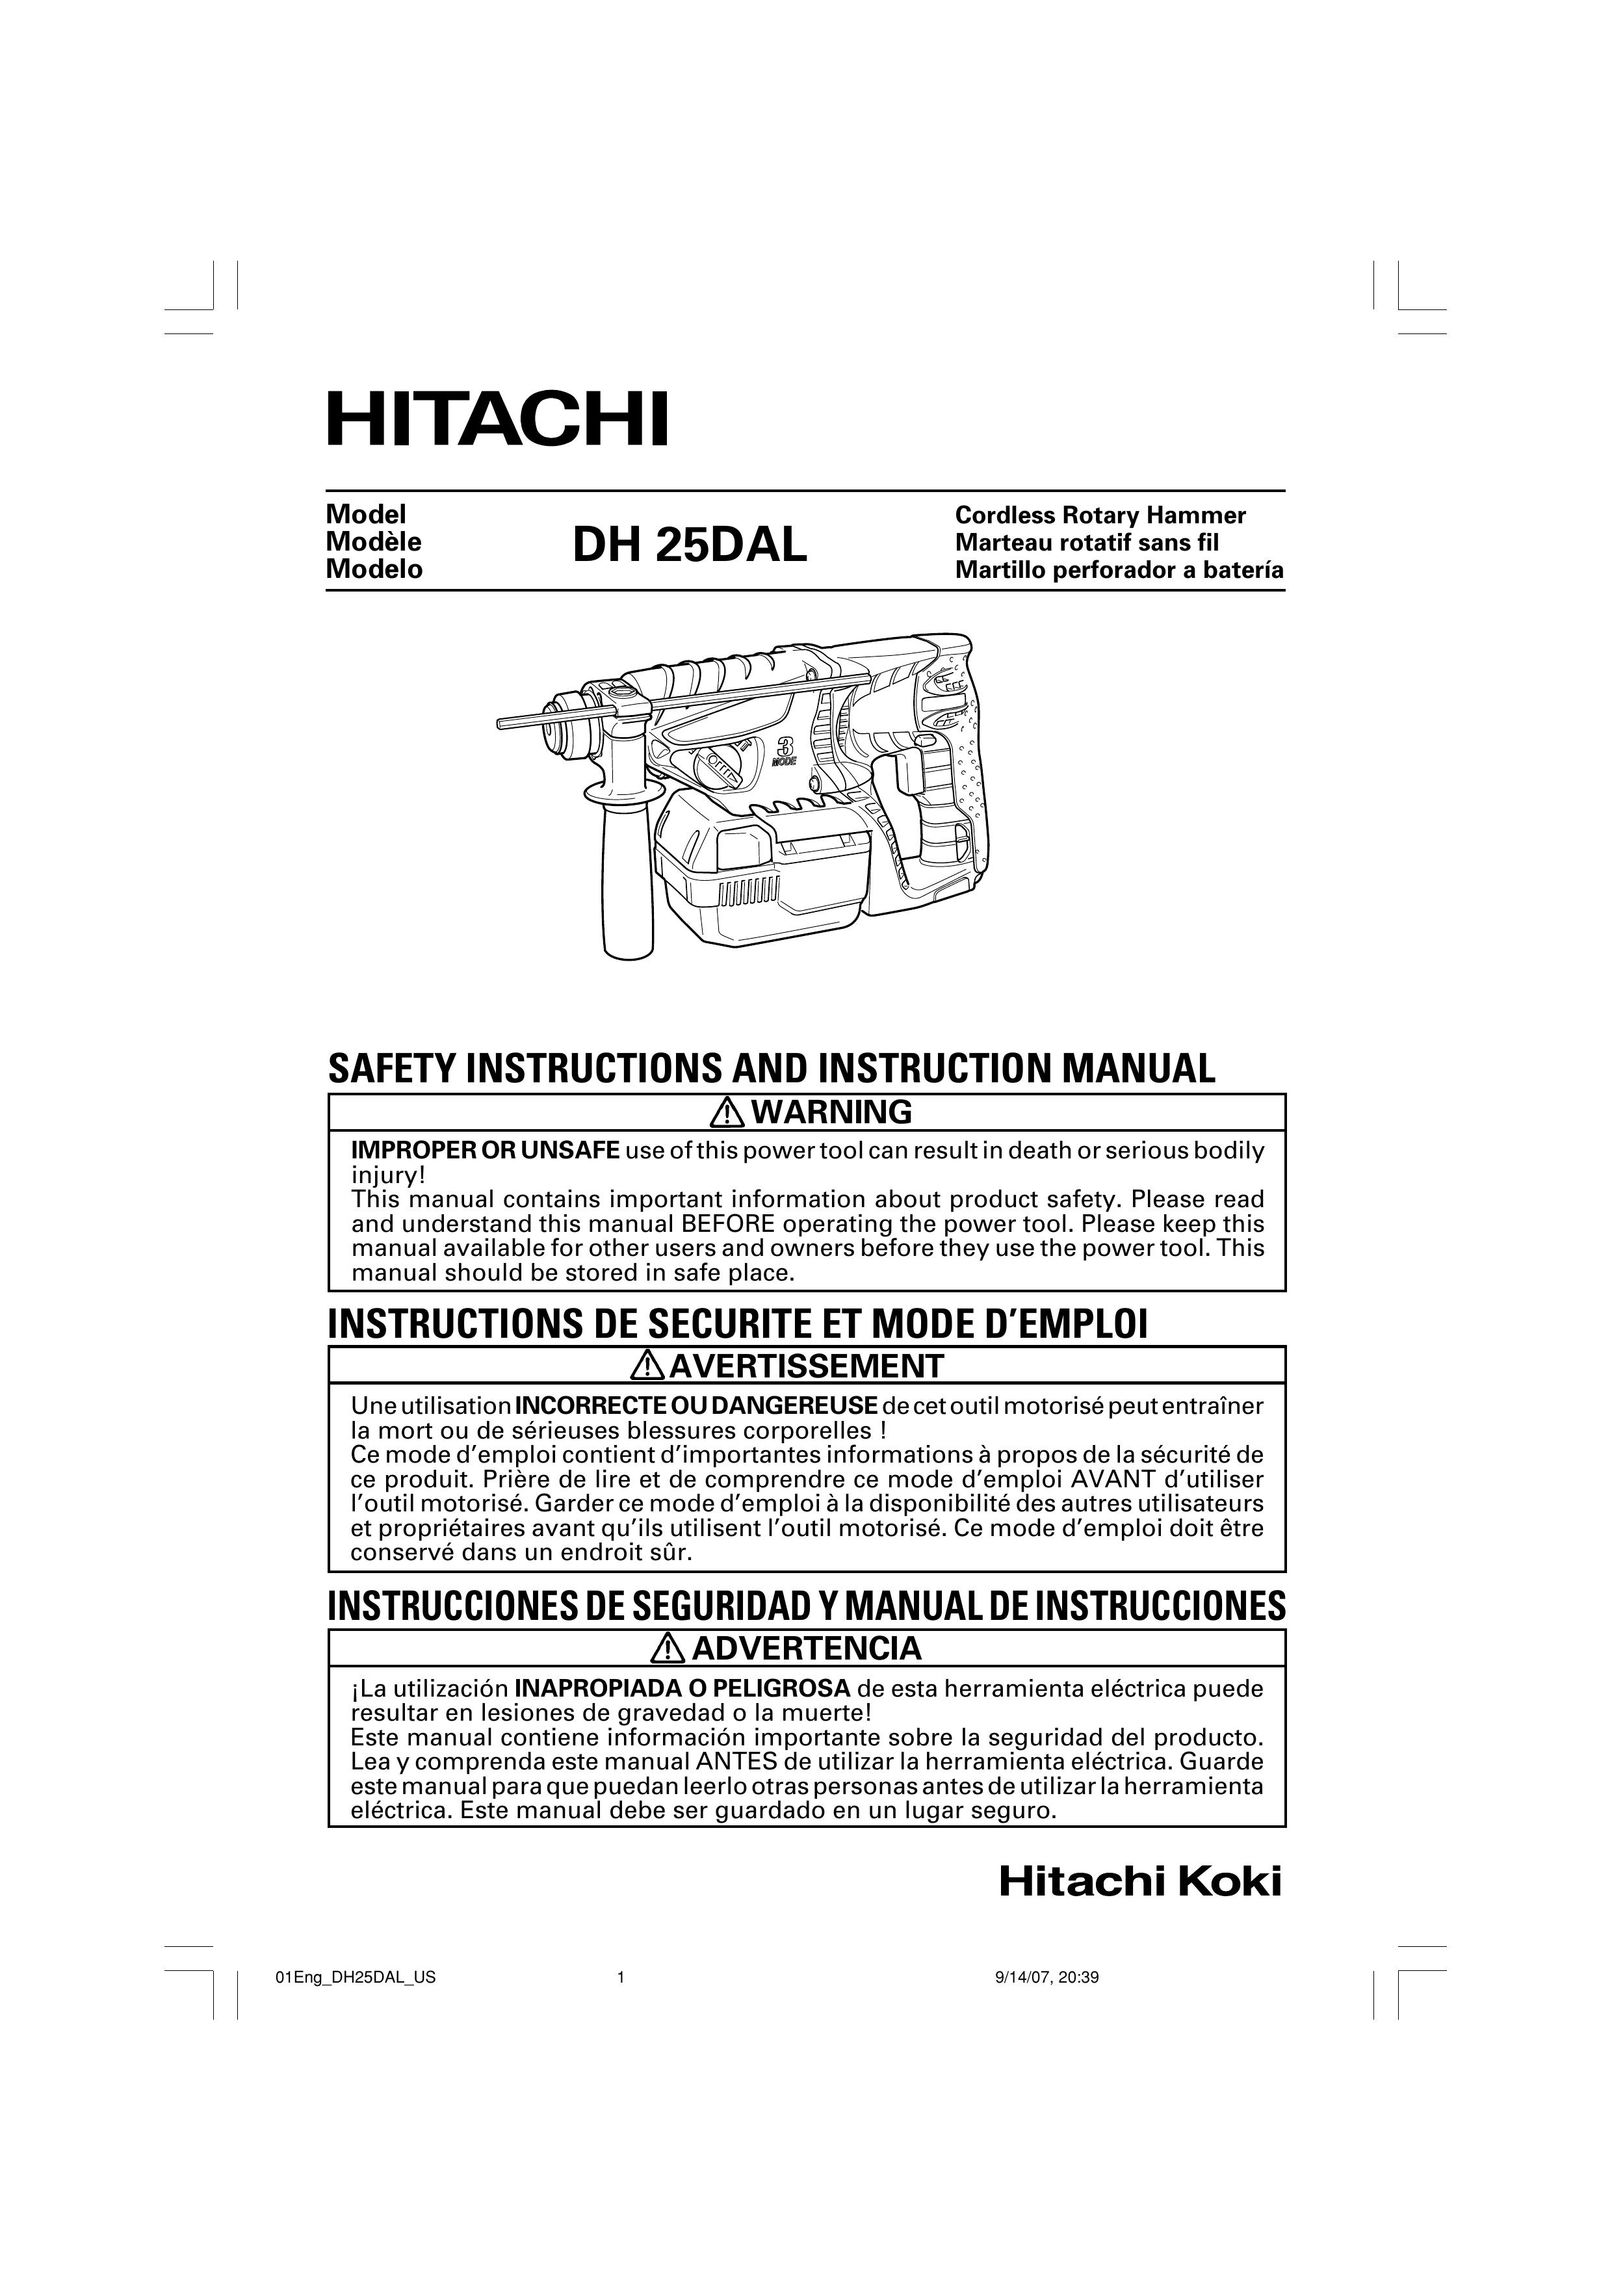 Hitachi DH 25DAL Power Hammer User Manual